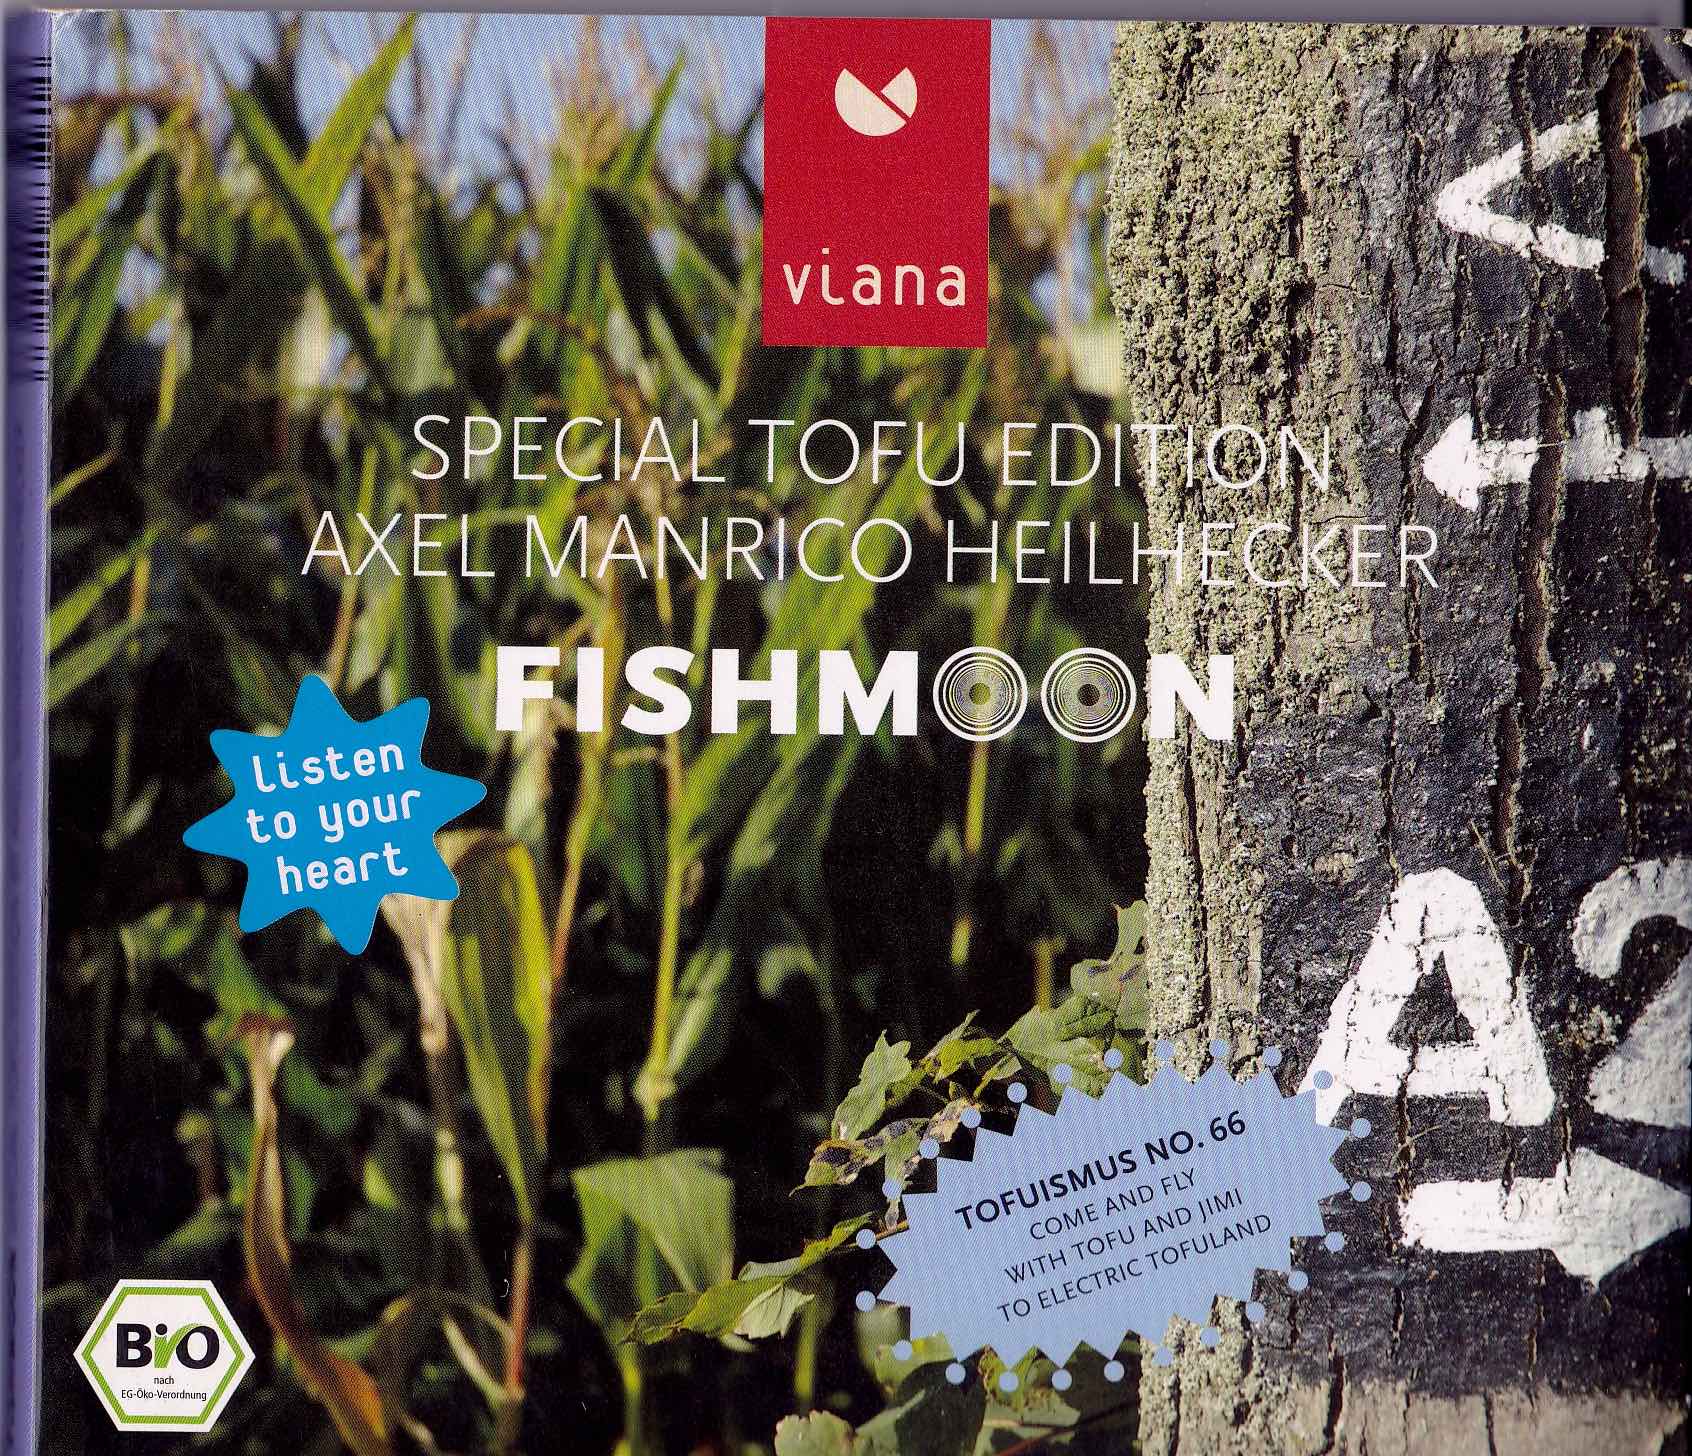 fishmoon special edition album cover